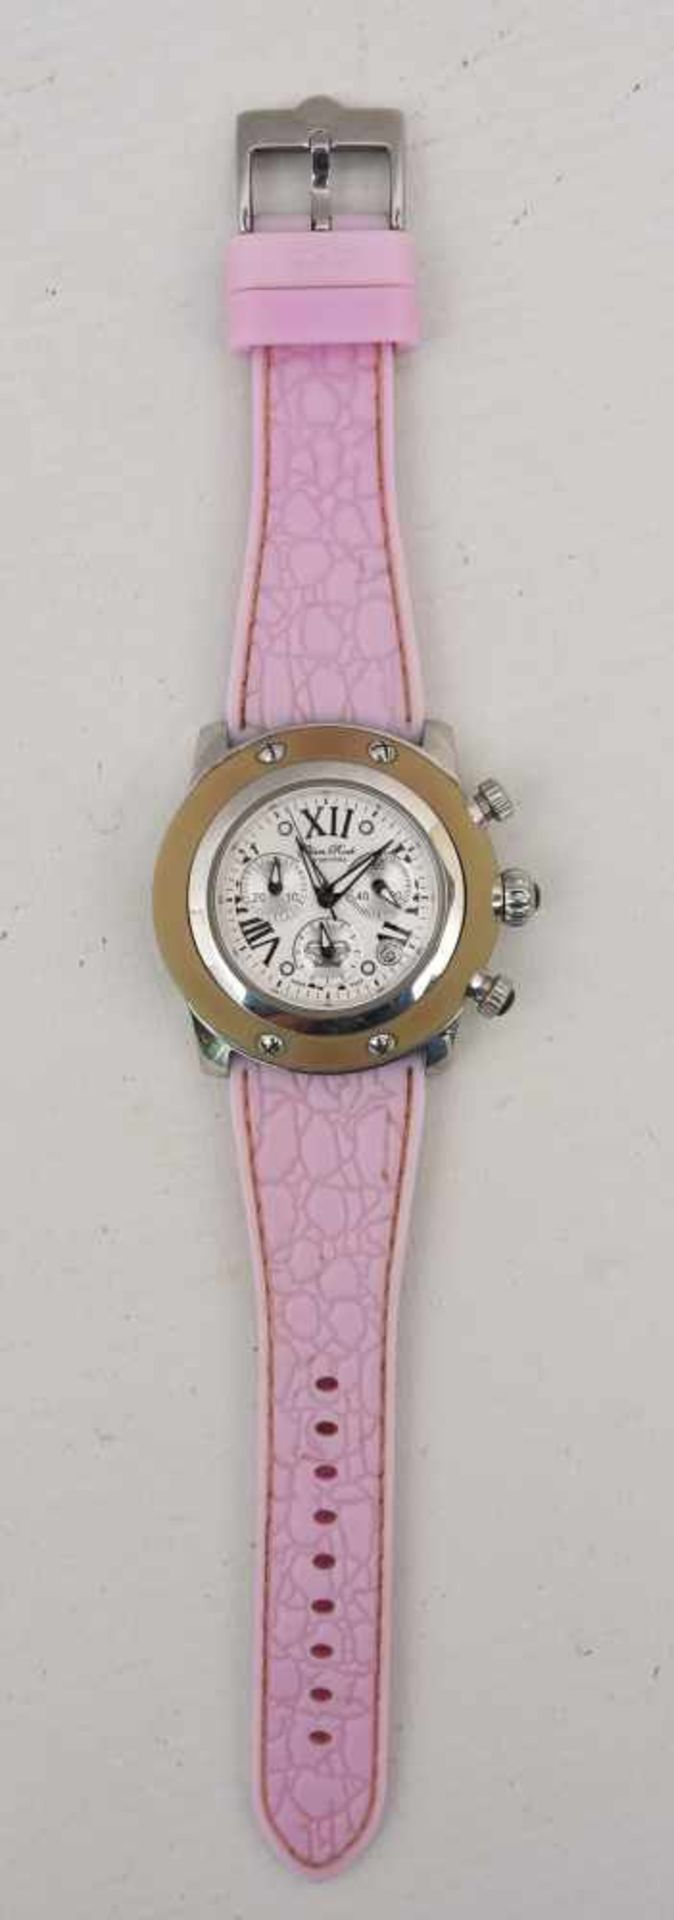 GLAM ROCK DAMENUHR ROSA, Edelstahl/Silikon, um 2000 Quartz Damen-Armbanduhr "Glam Rock". rosa